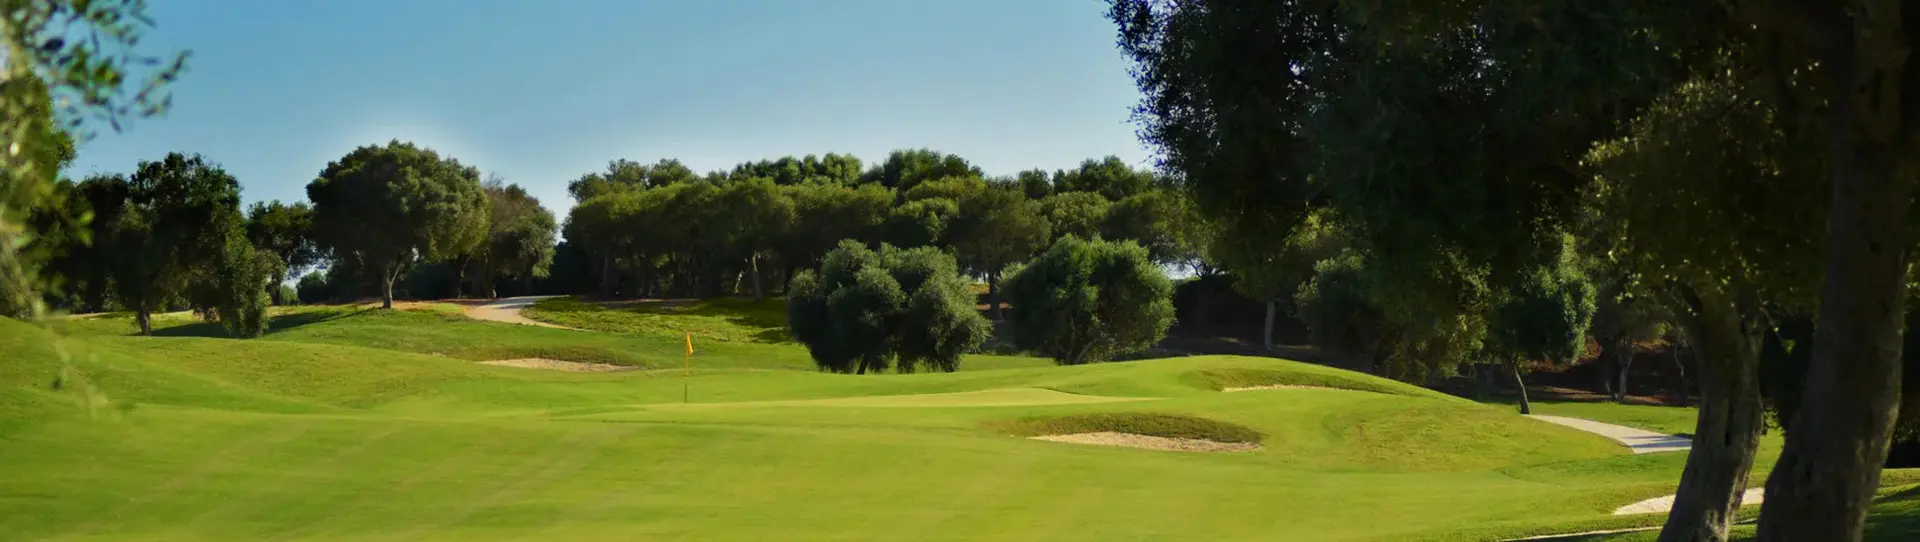 Spain golf holidays - Costa de la Luz 4 Rounds Golf Pack - Photo 3